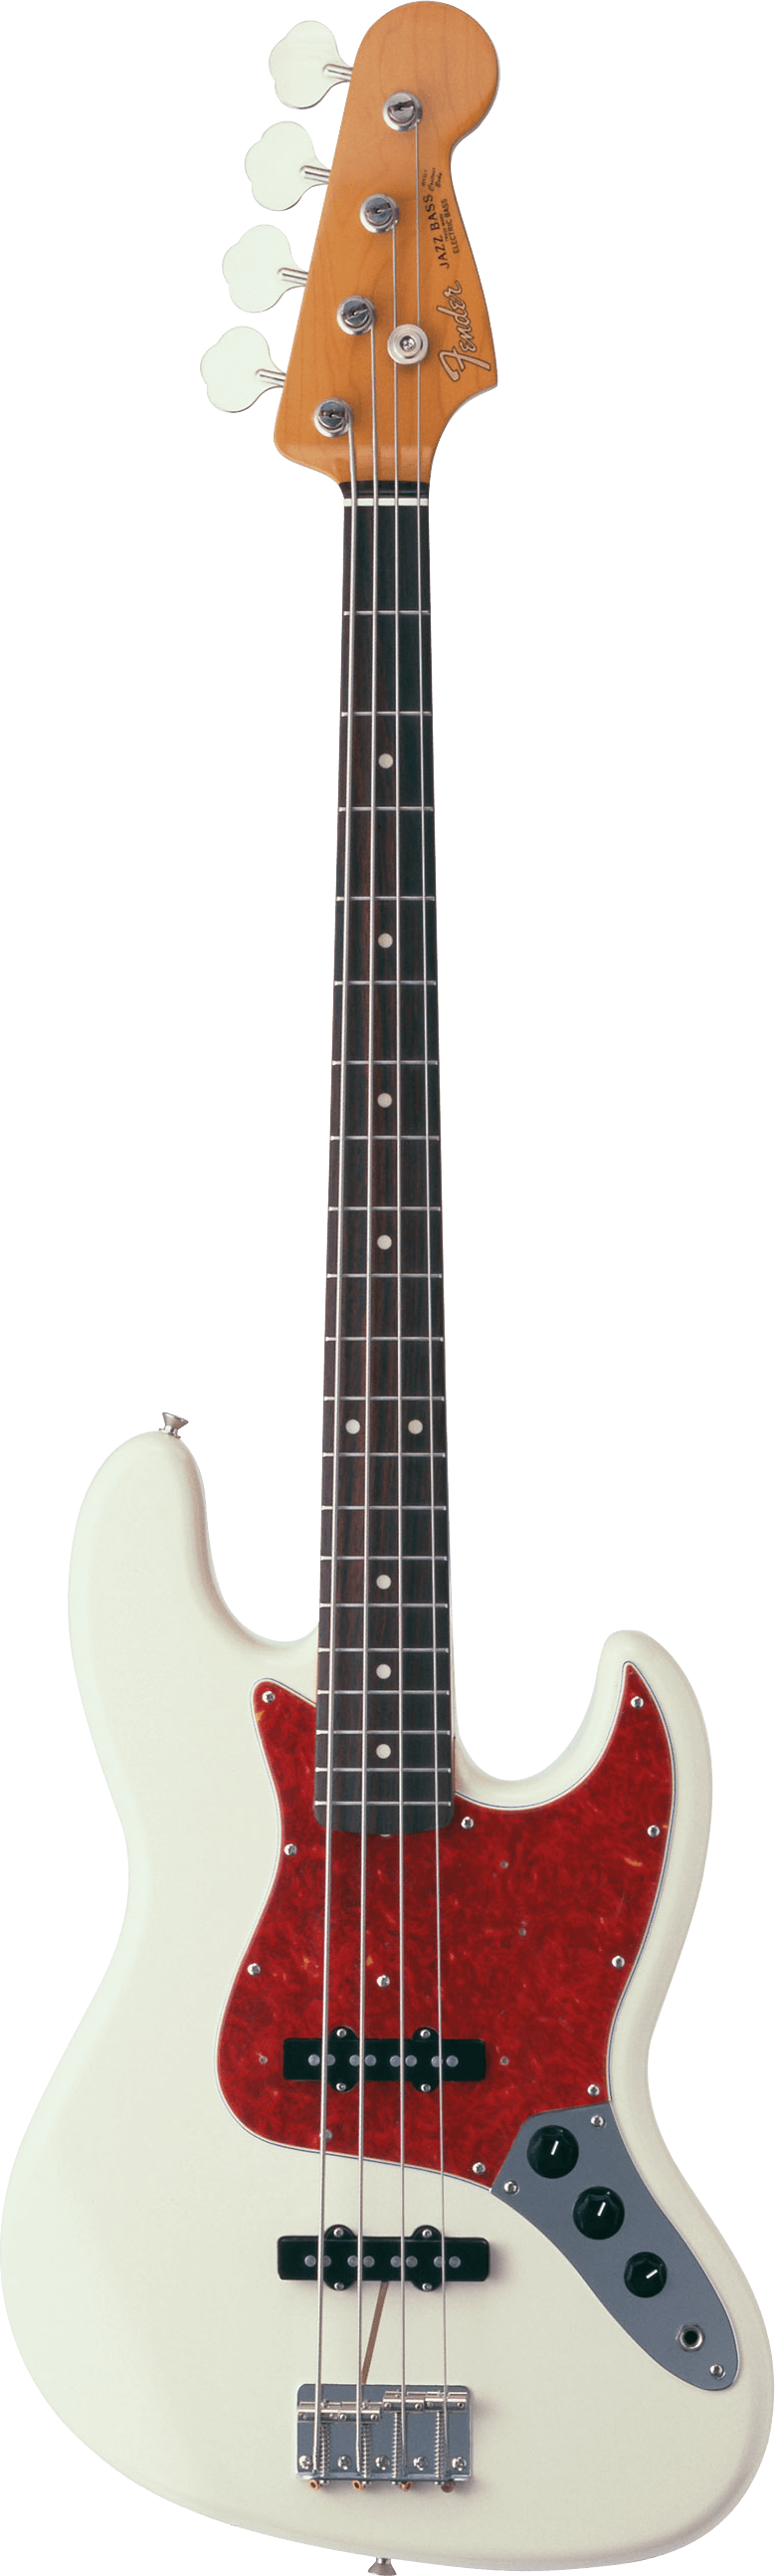 Clipart guitar electric guitar. Acoustic transparent png stickpng